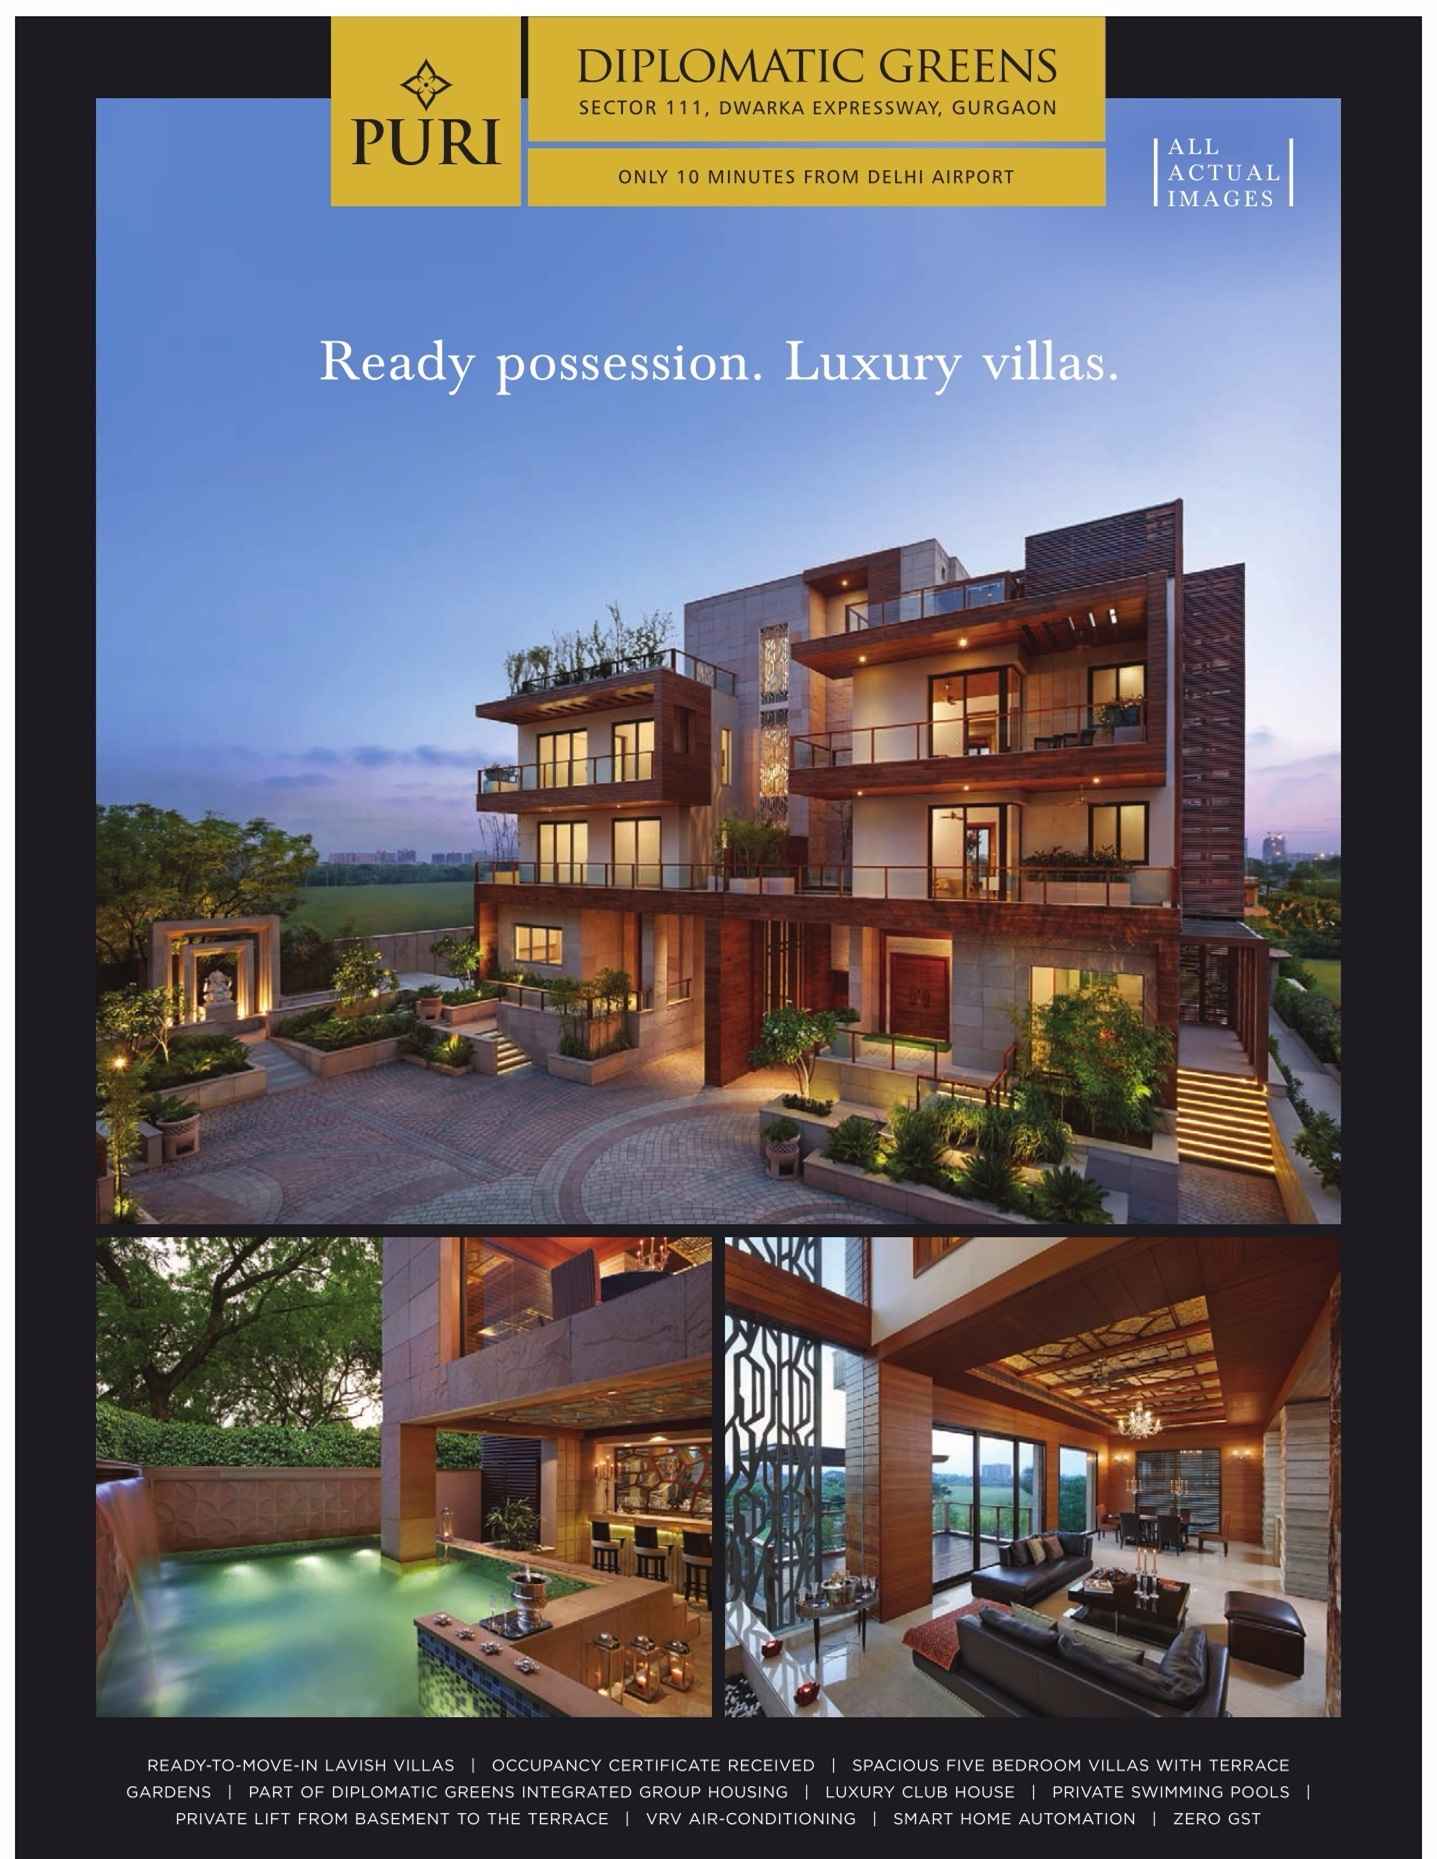 Puri Diplomatic Greens presents ready to move luxury Villas in Gurgaon